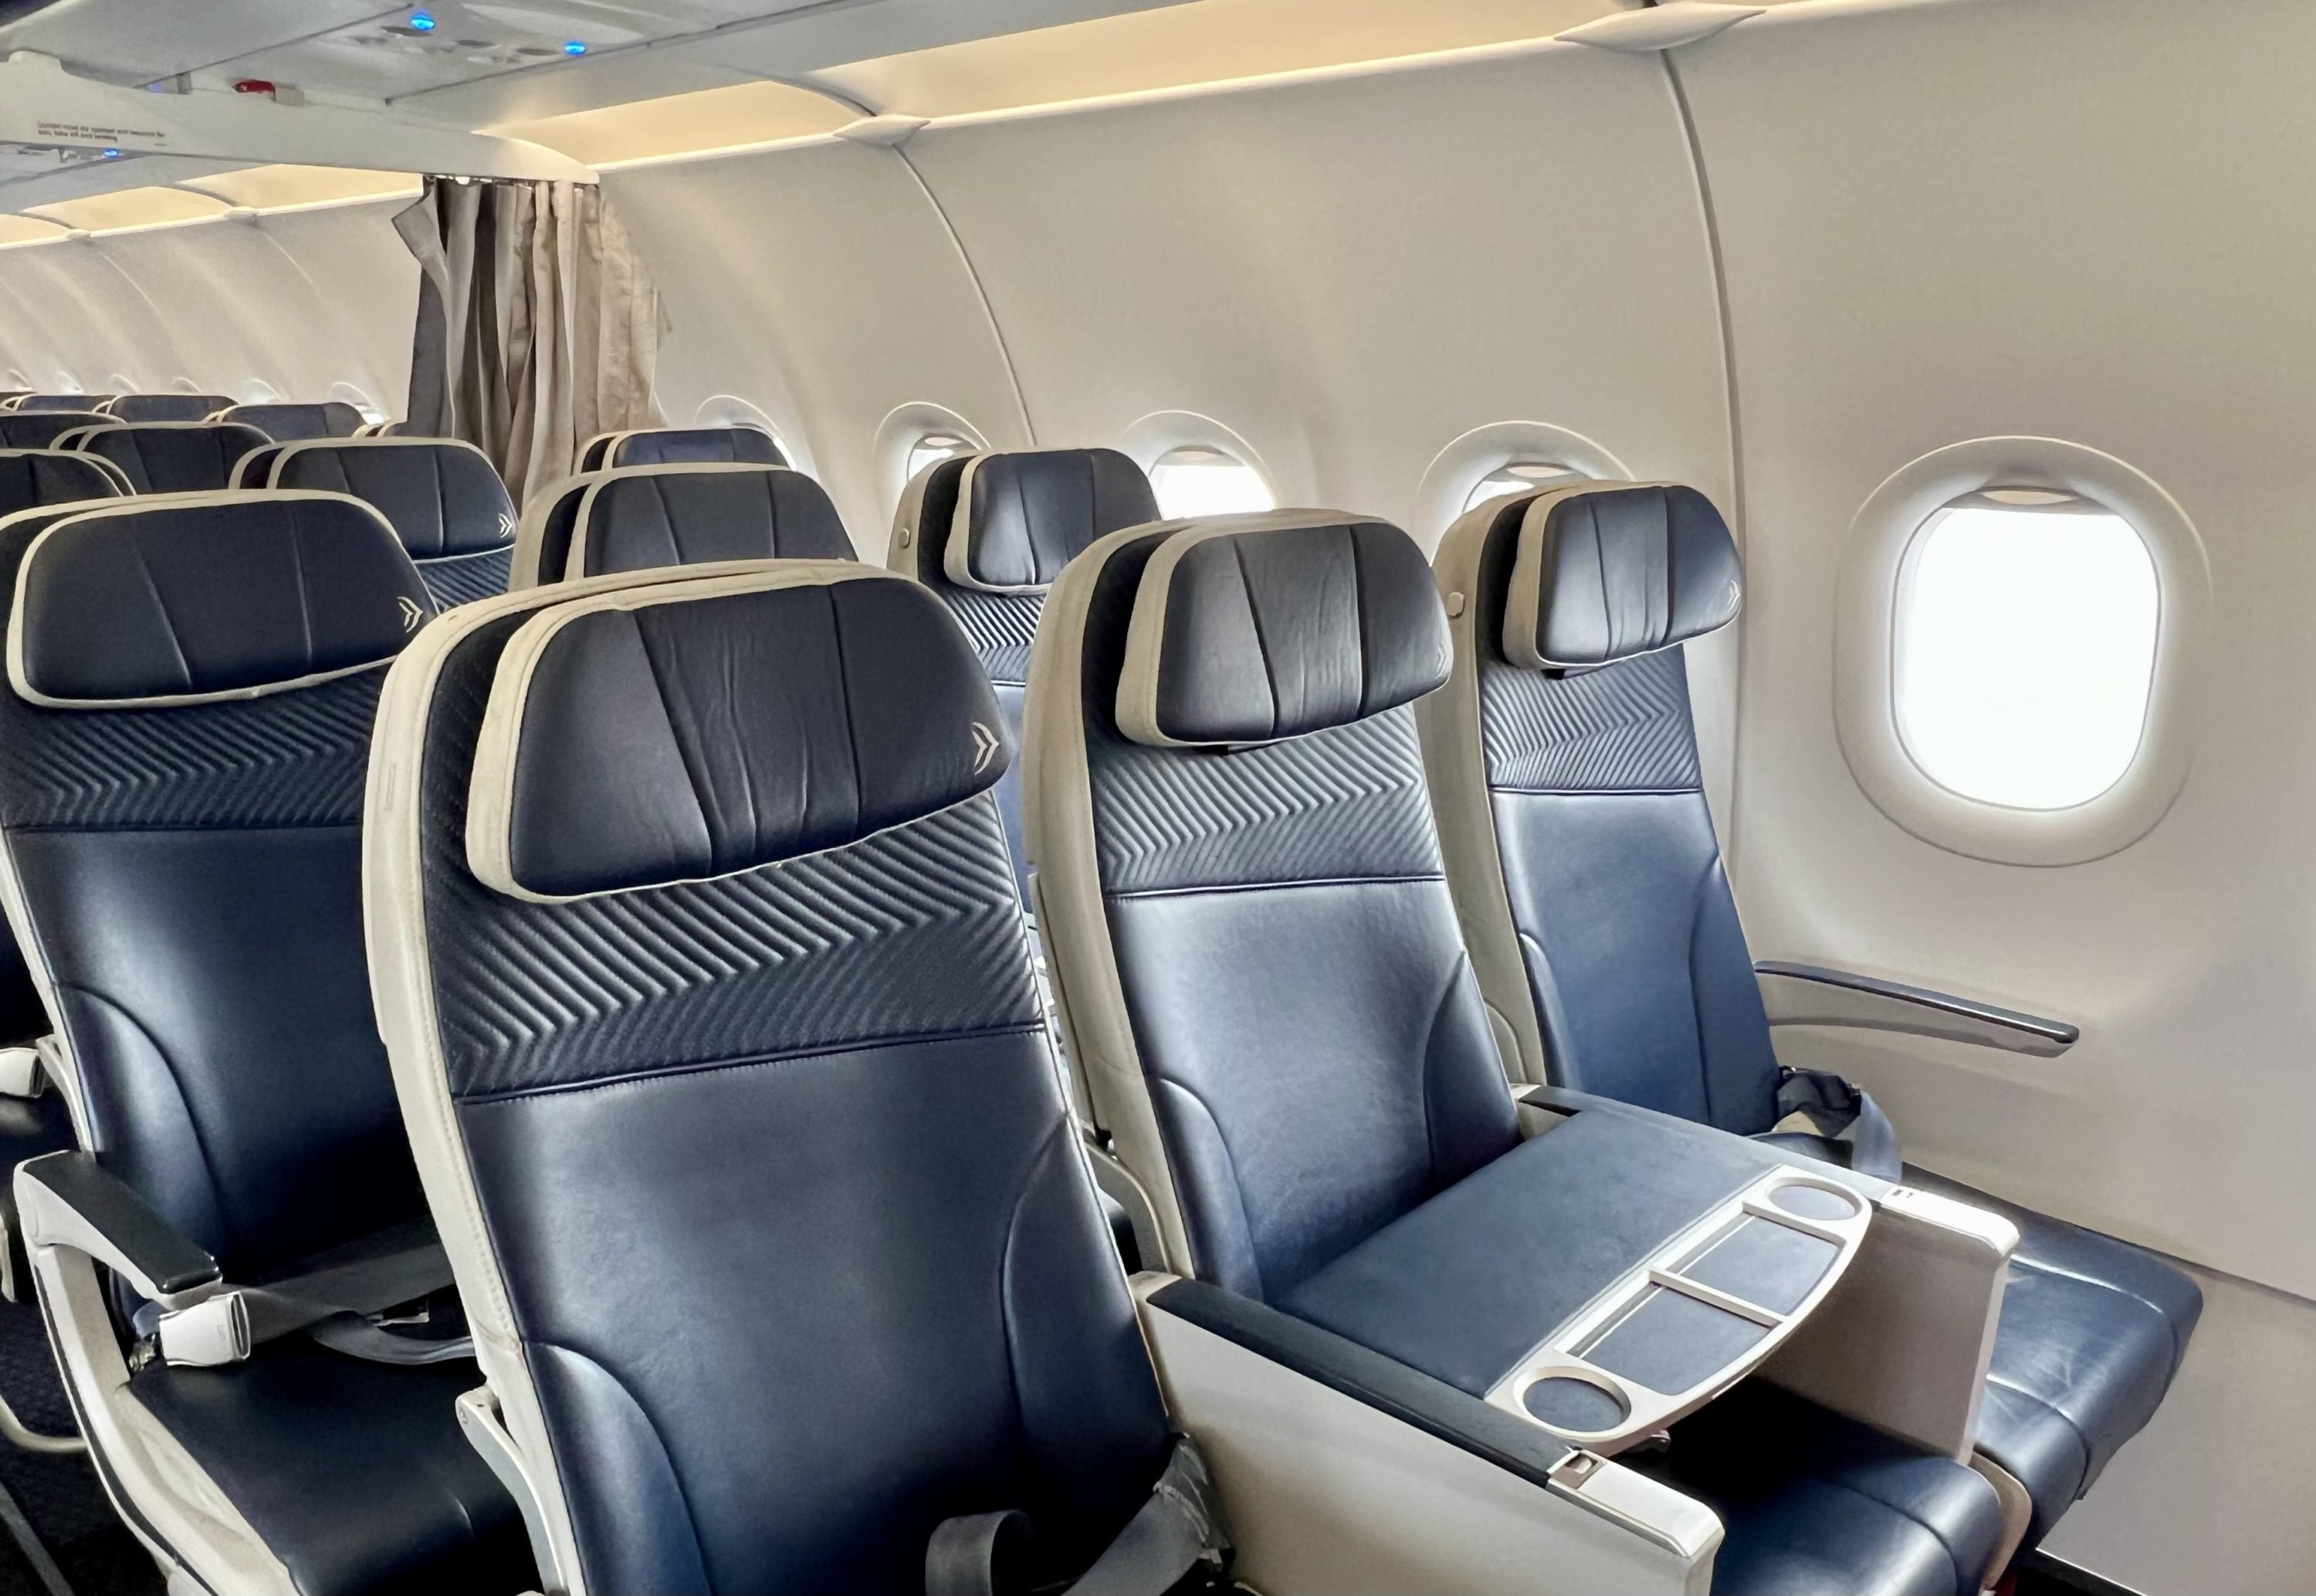 Aegean upgrade bid Aegean Airbus A320neo business class seats 1A and 1C